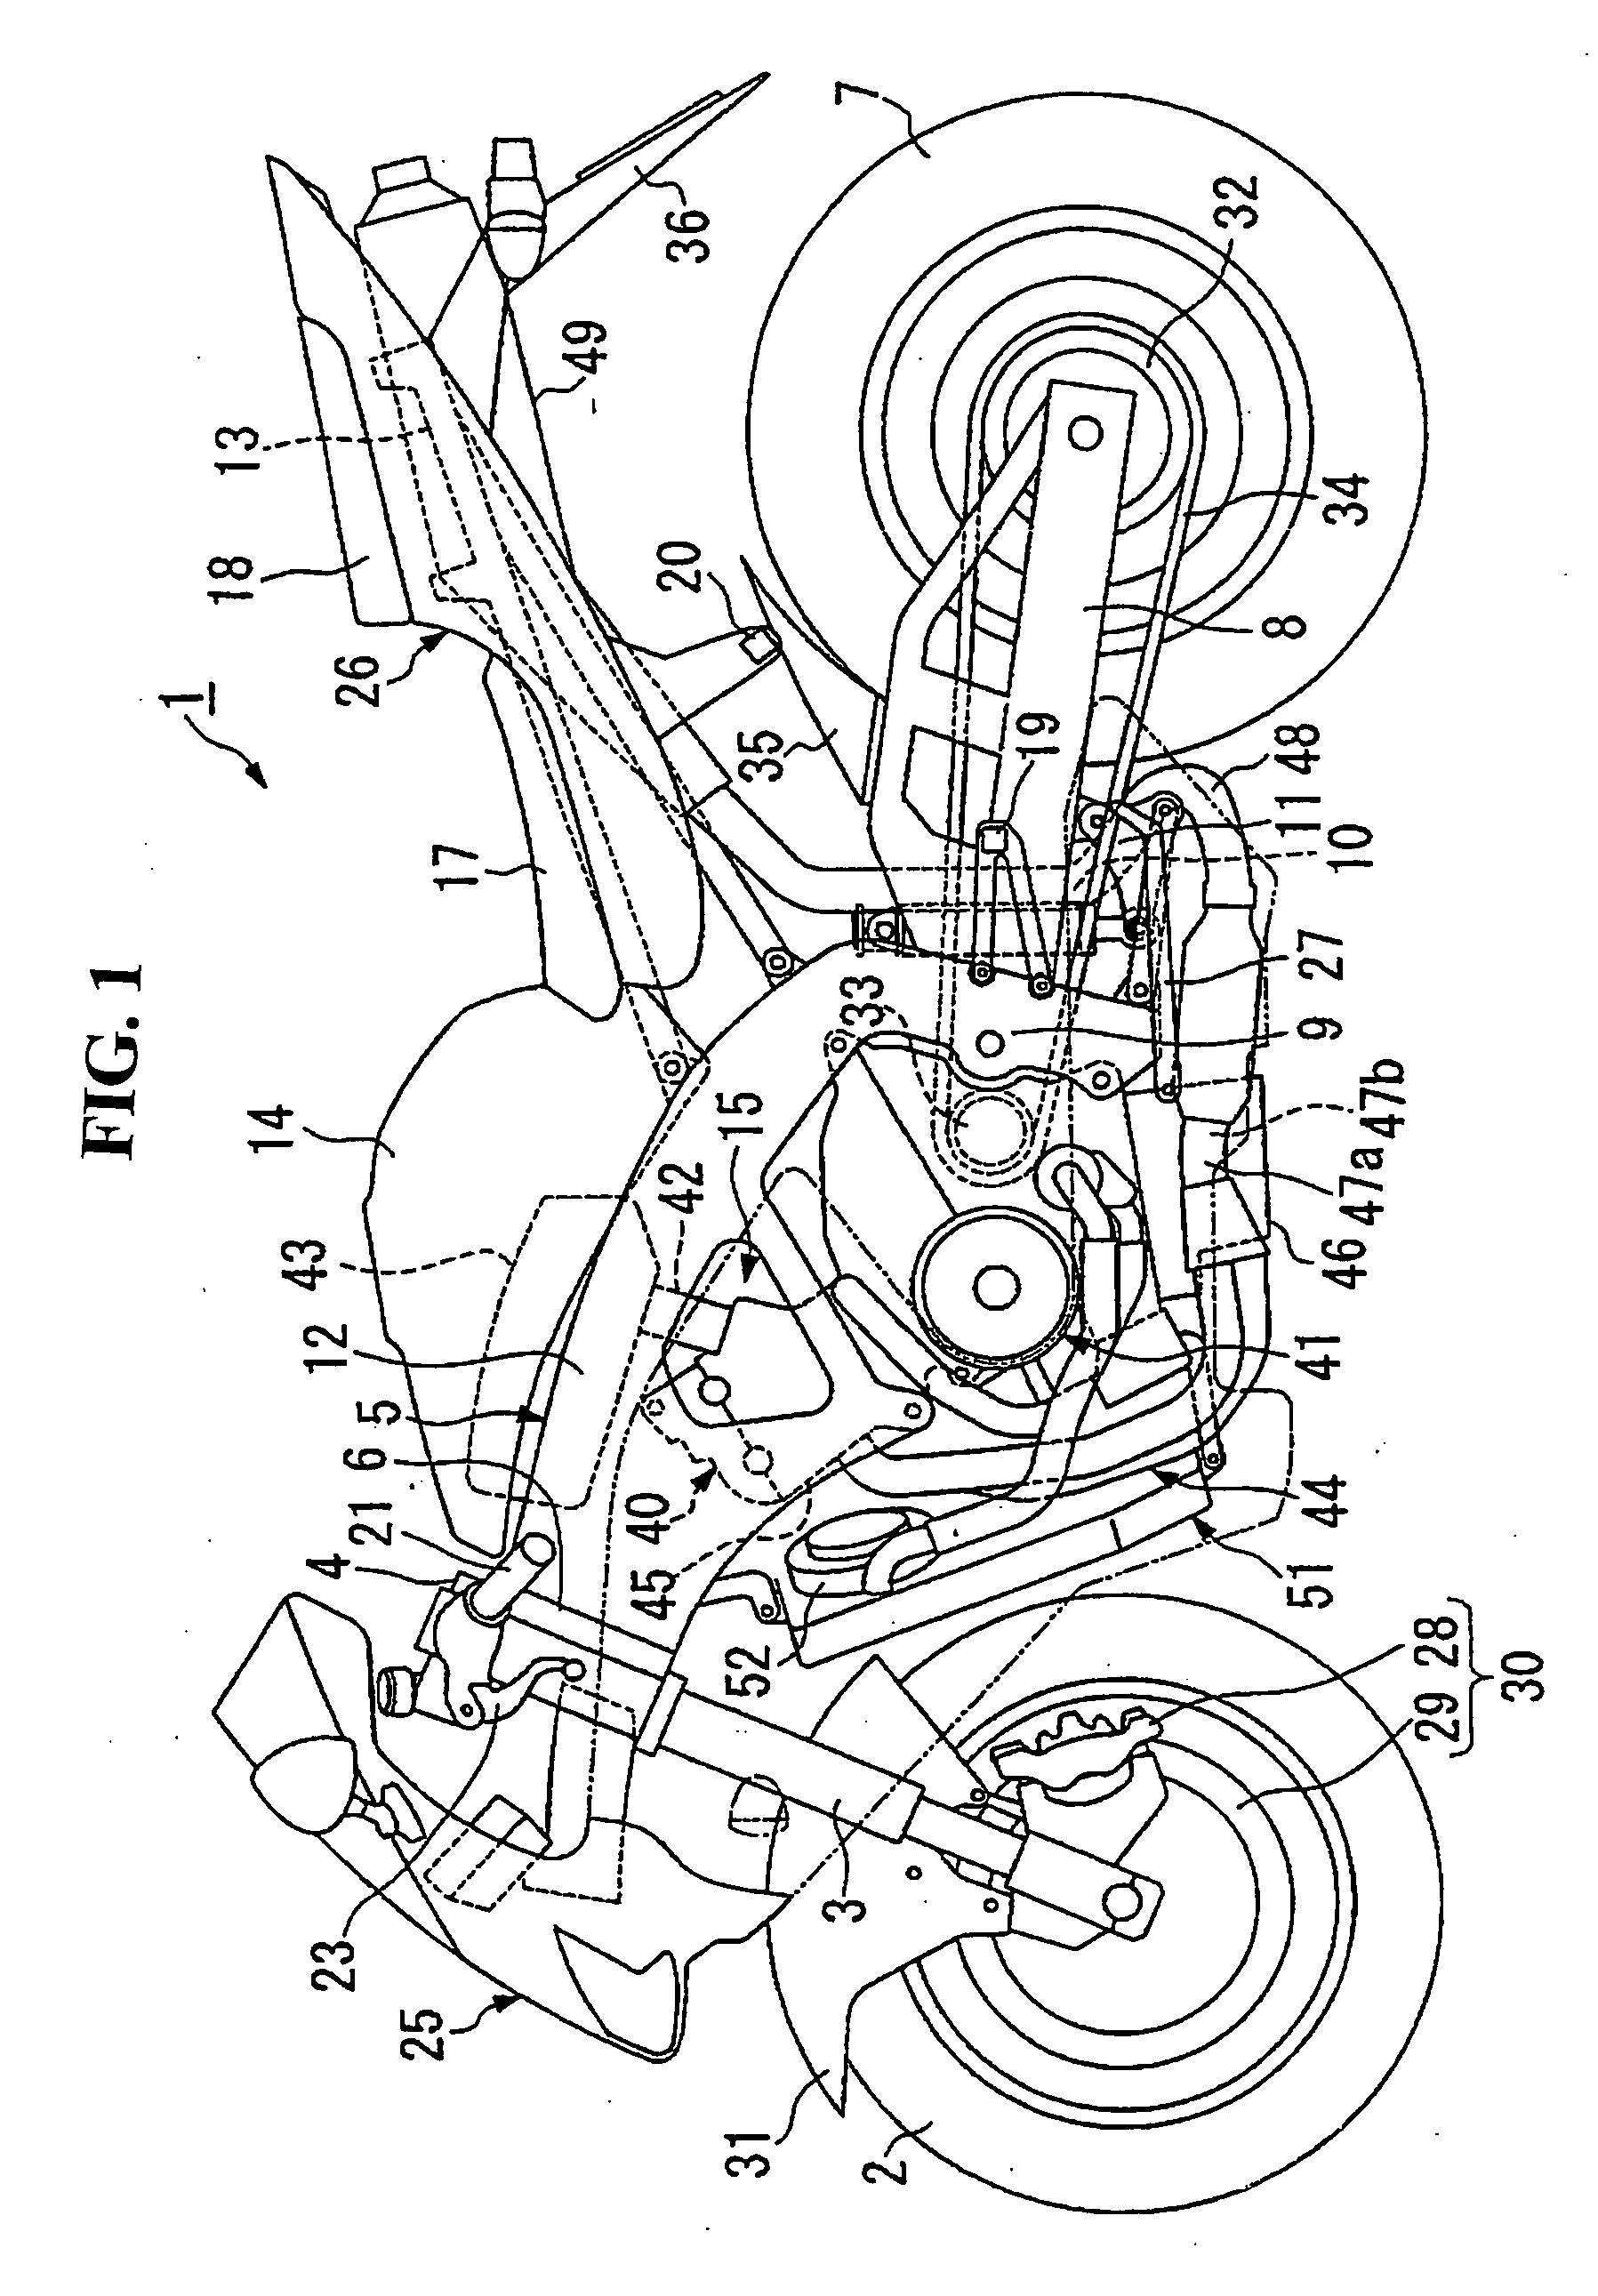 Engine crankcase structure